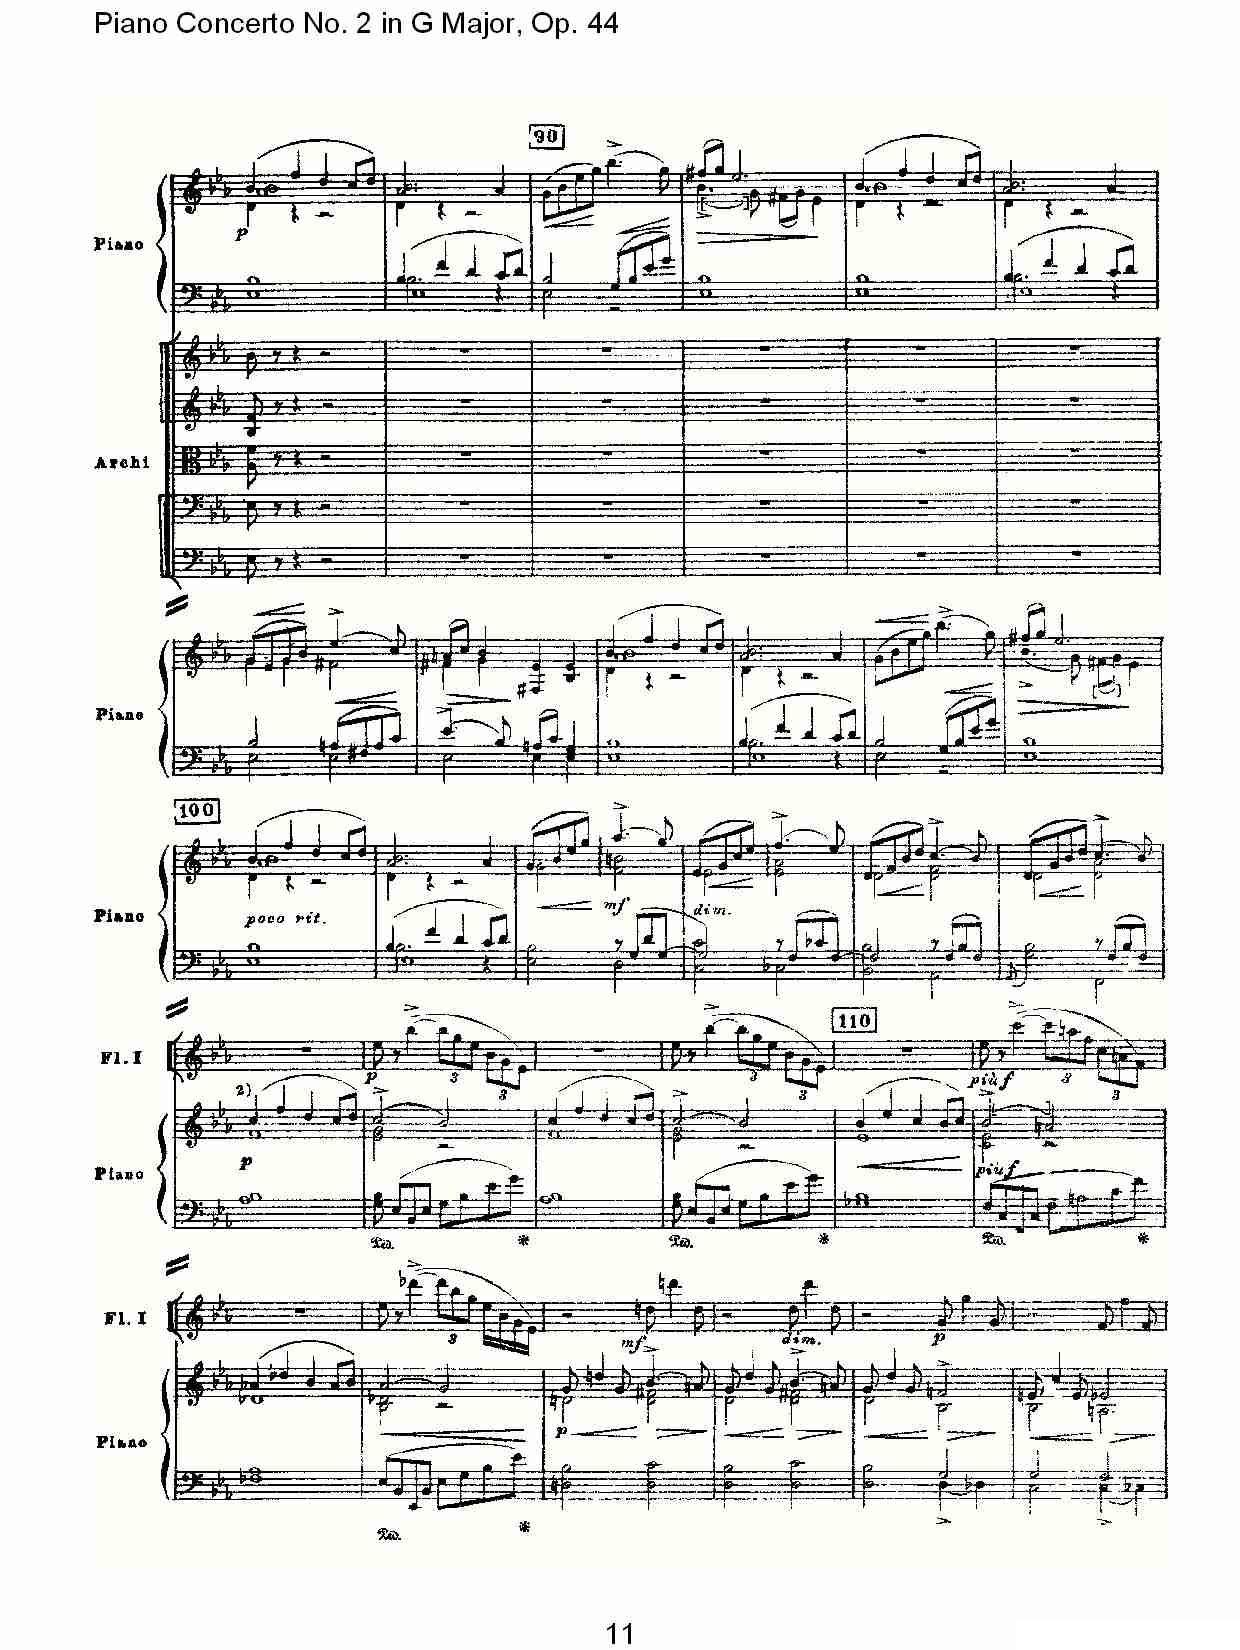 G大调第二钢琴协奏曲, Op.44第一乐章（一）钢琴曲谱（图11）